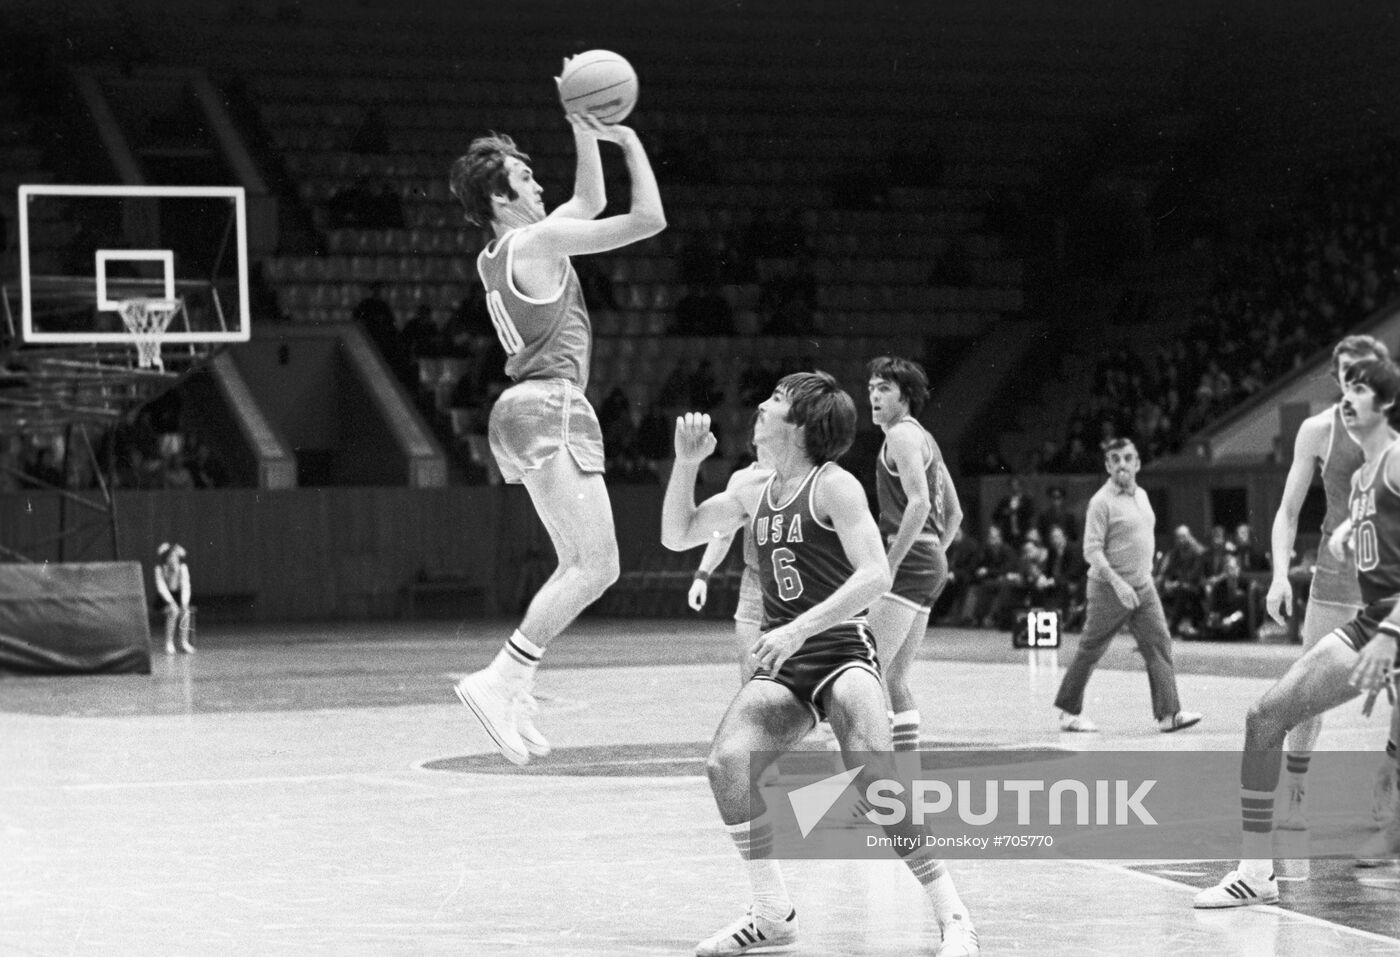 Match between Soviet and U.S. national basketball teams